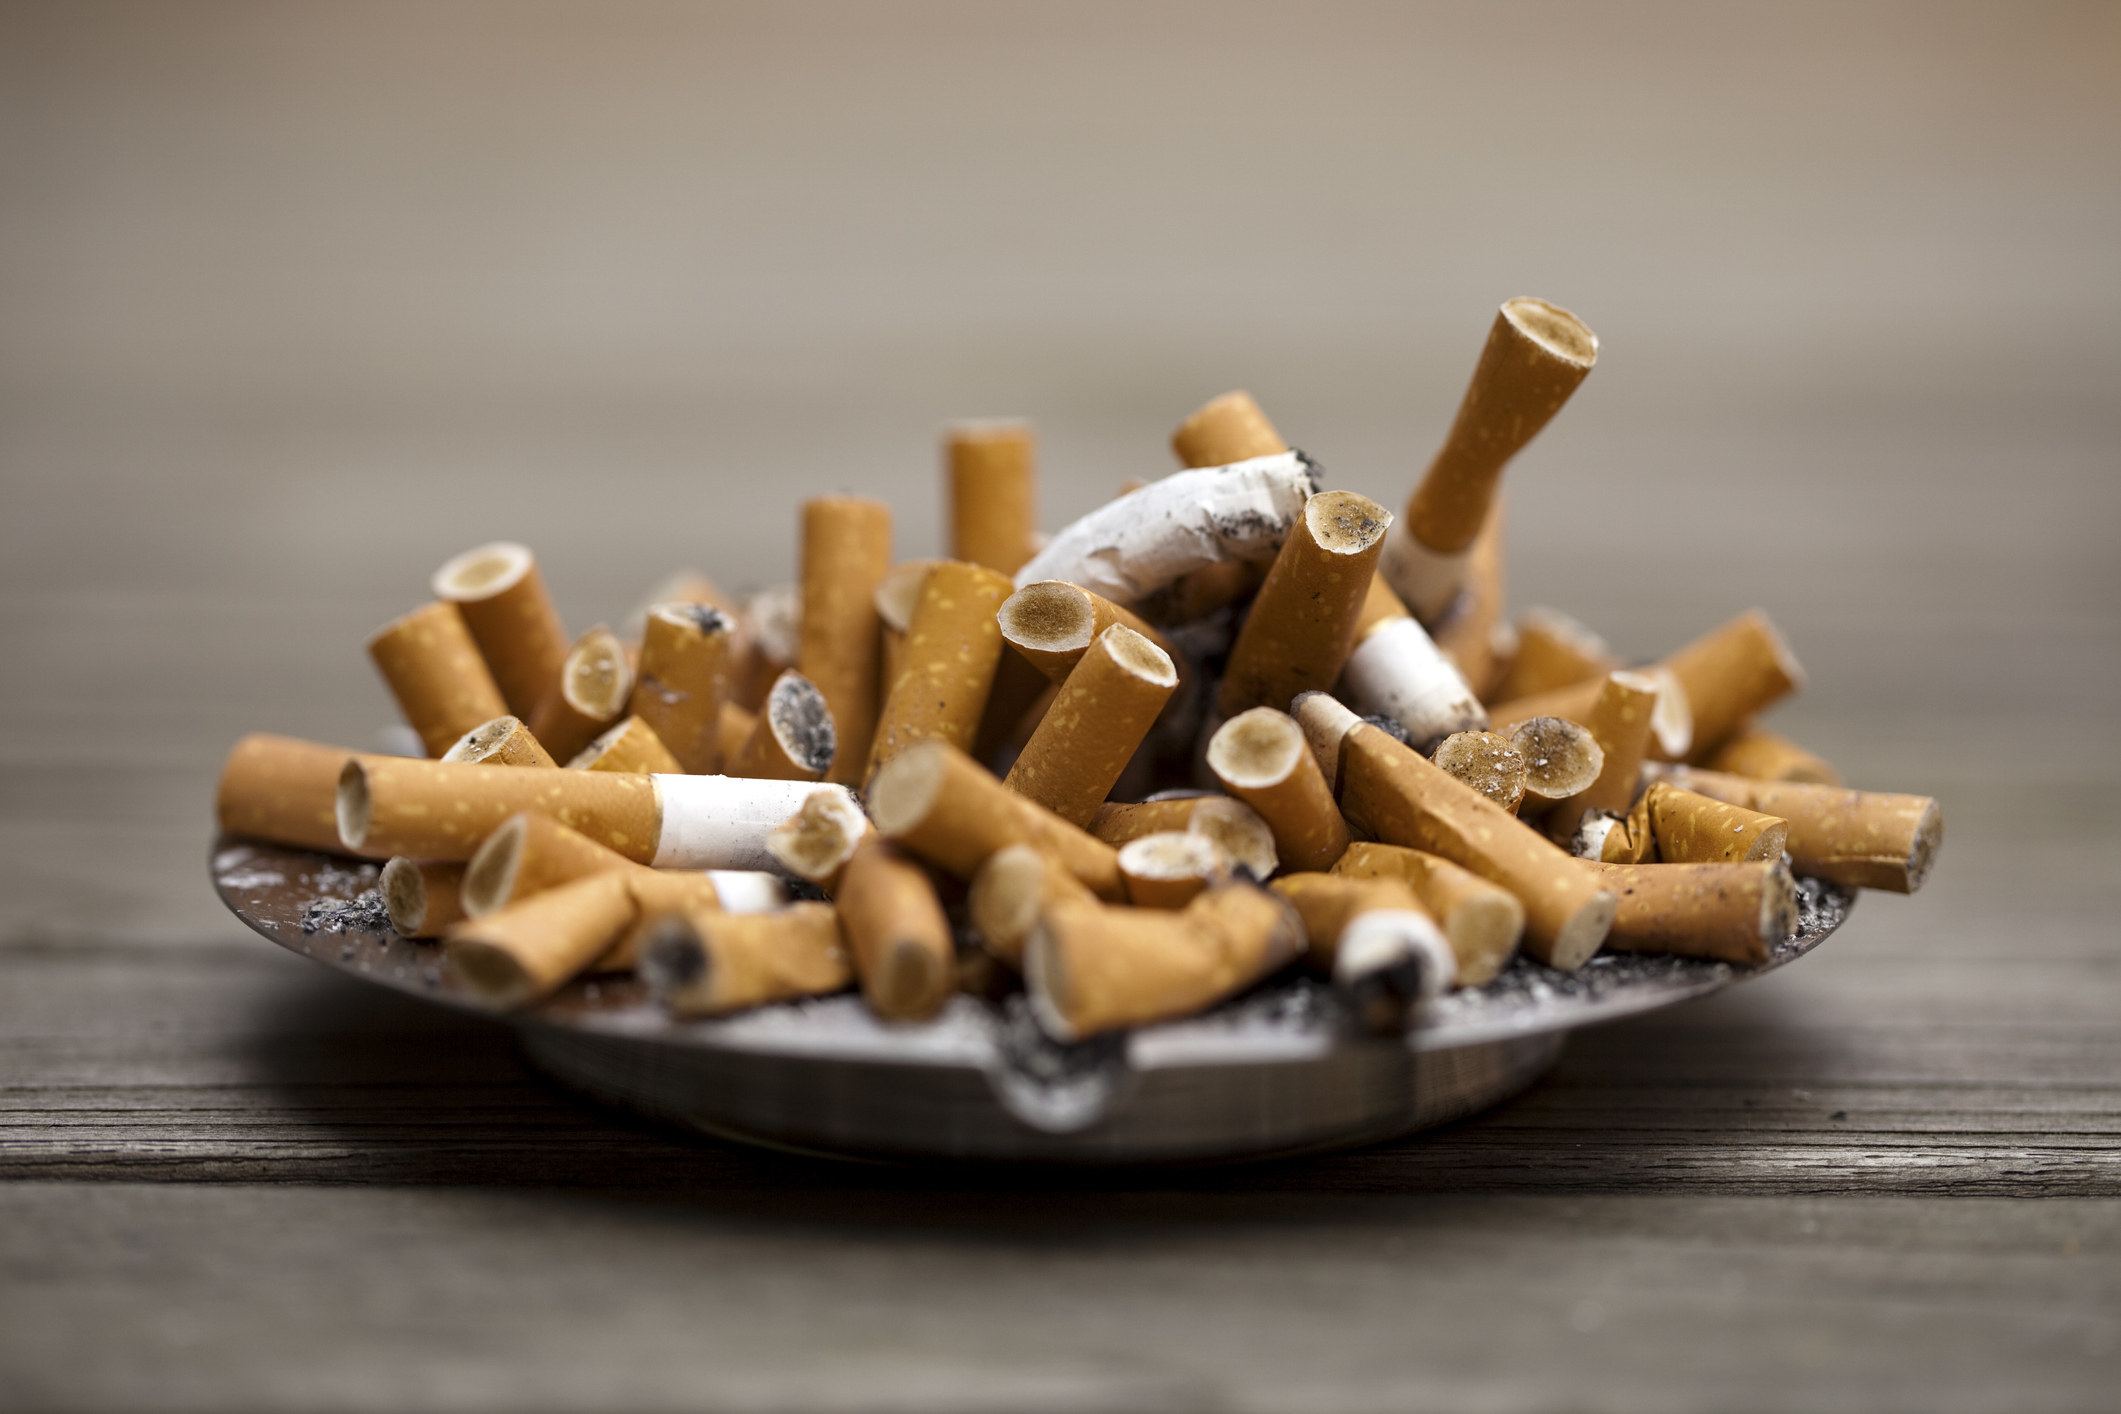 An ashtray full of cigarettes